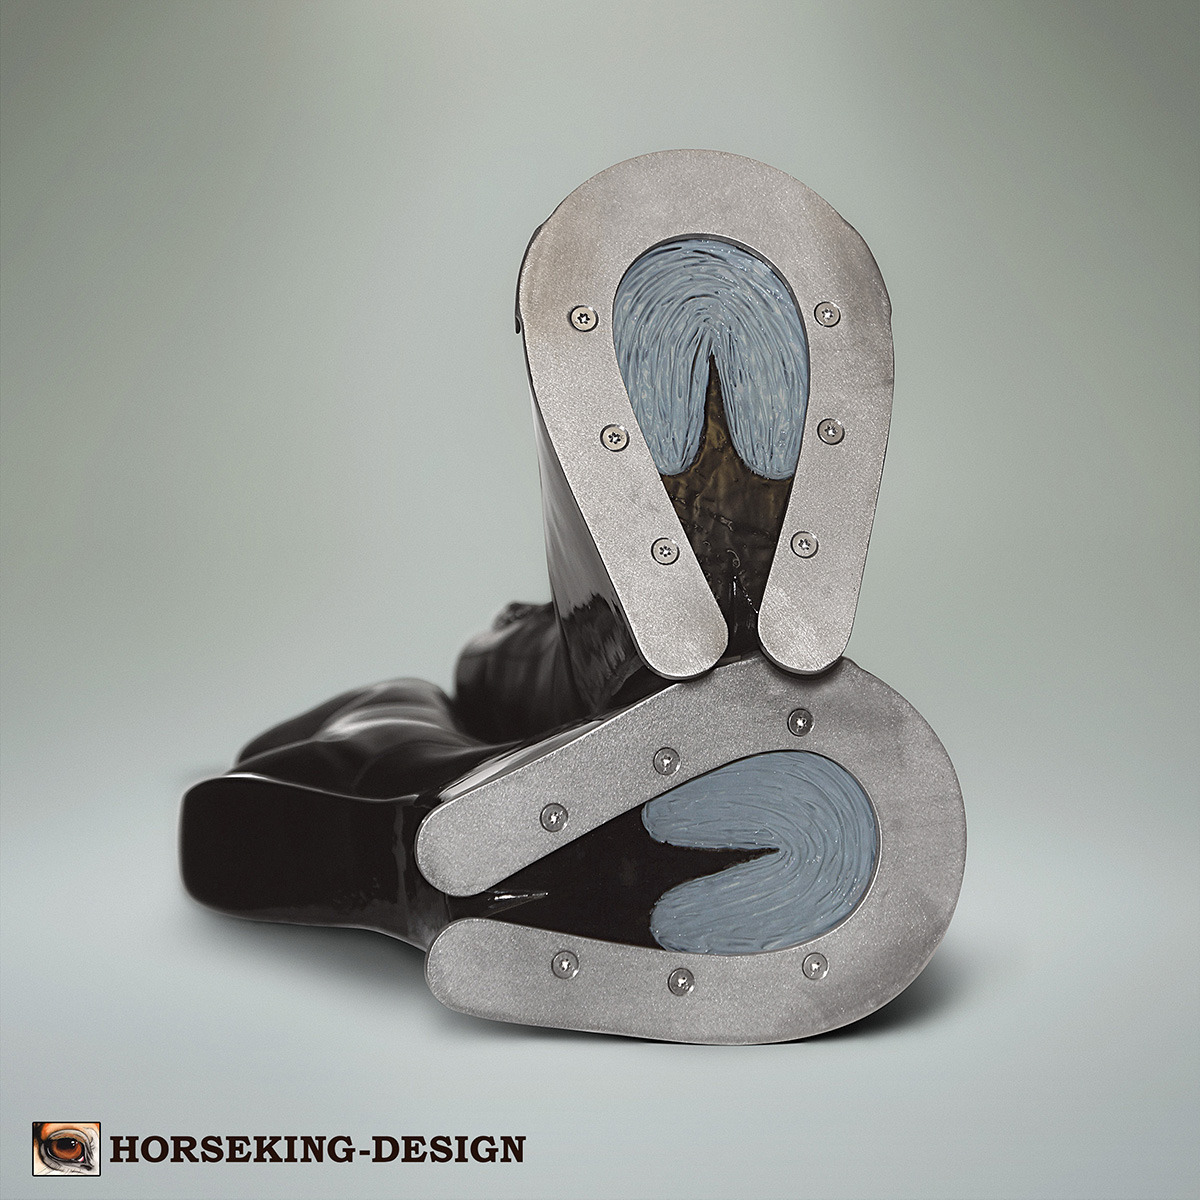 HORSEKING DESIGN — Draft horse boots with shiny surface